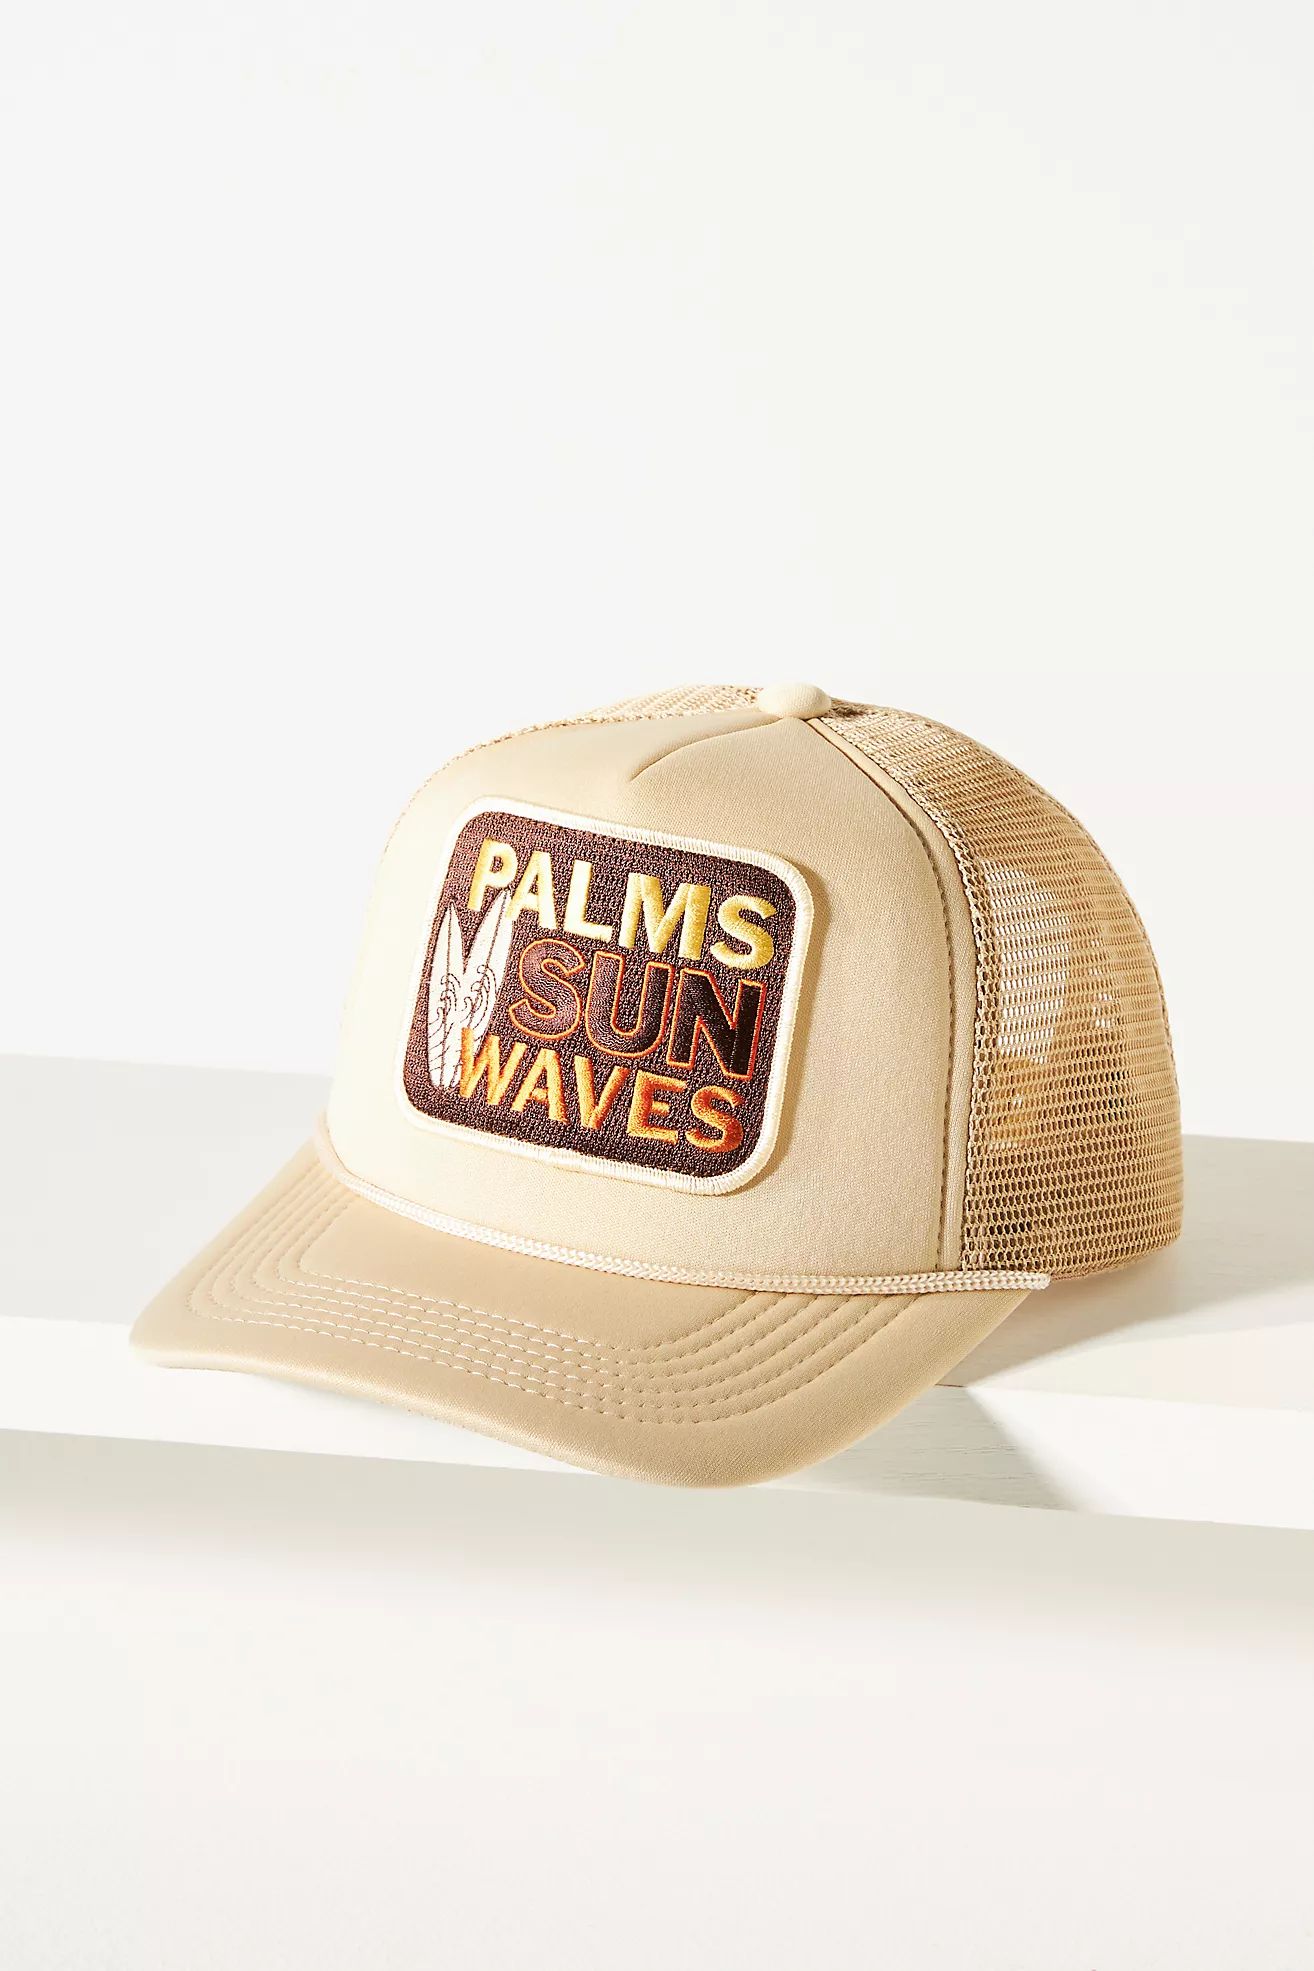 Friday Feelin Palms Sun Waves Trucker Hat | Anthropologie (US)